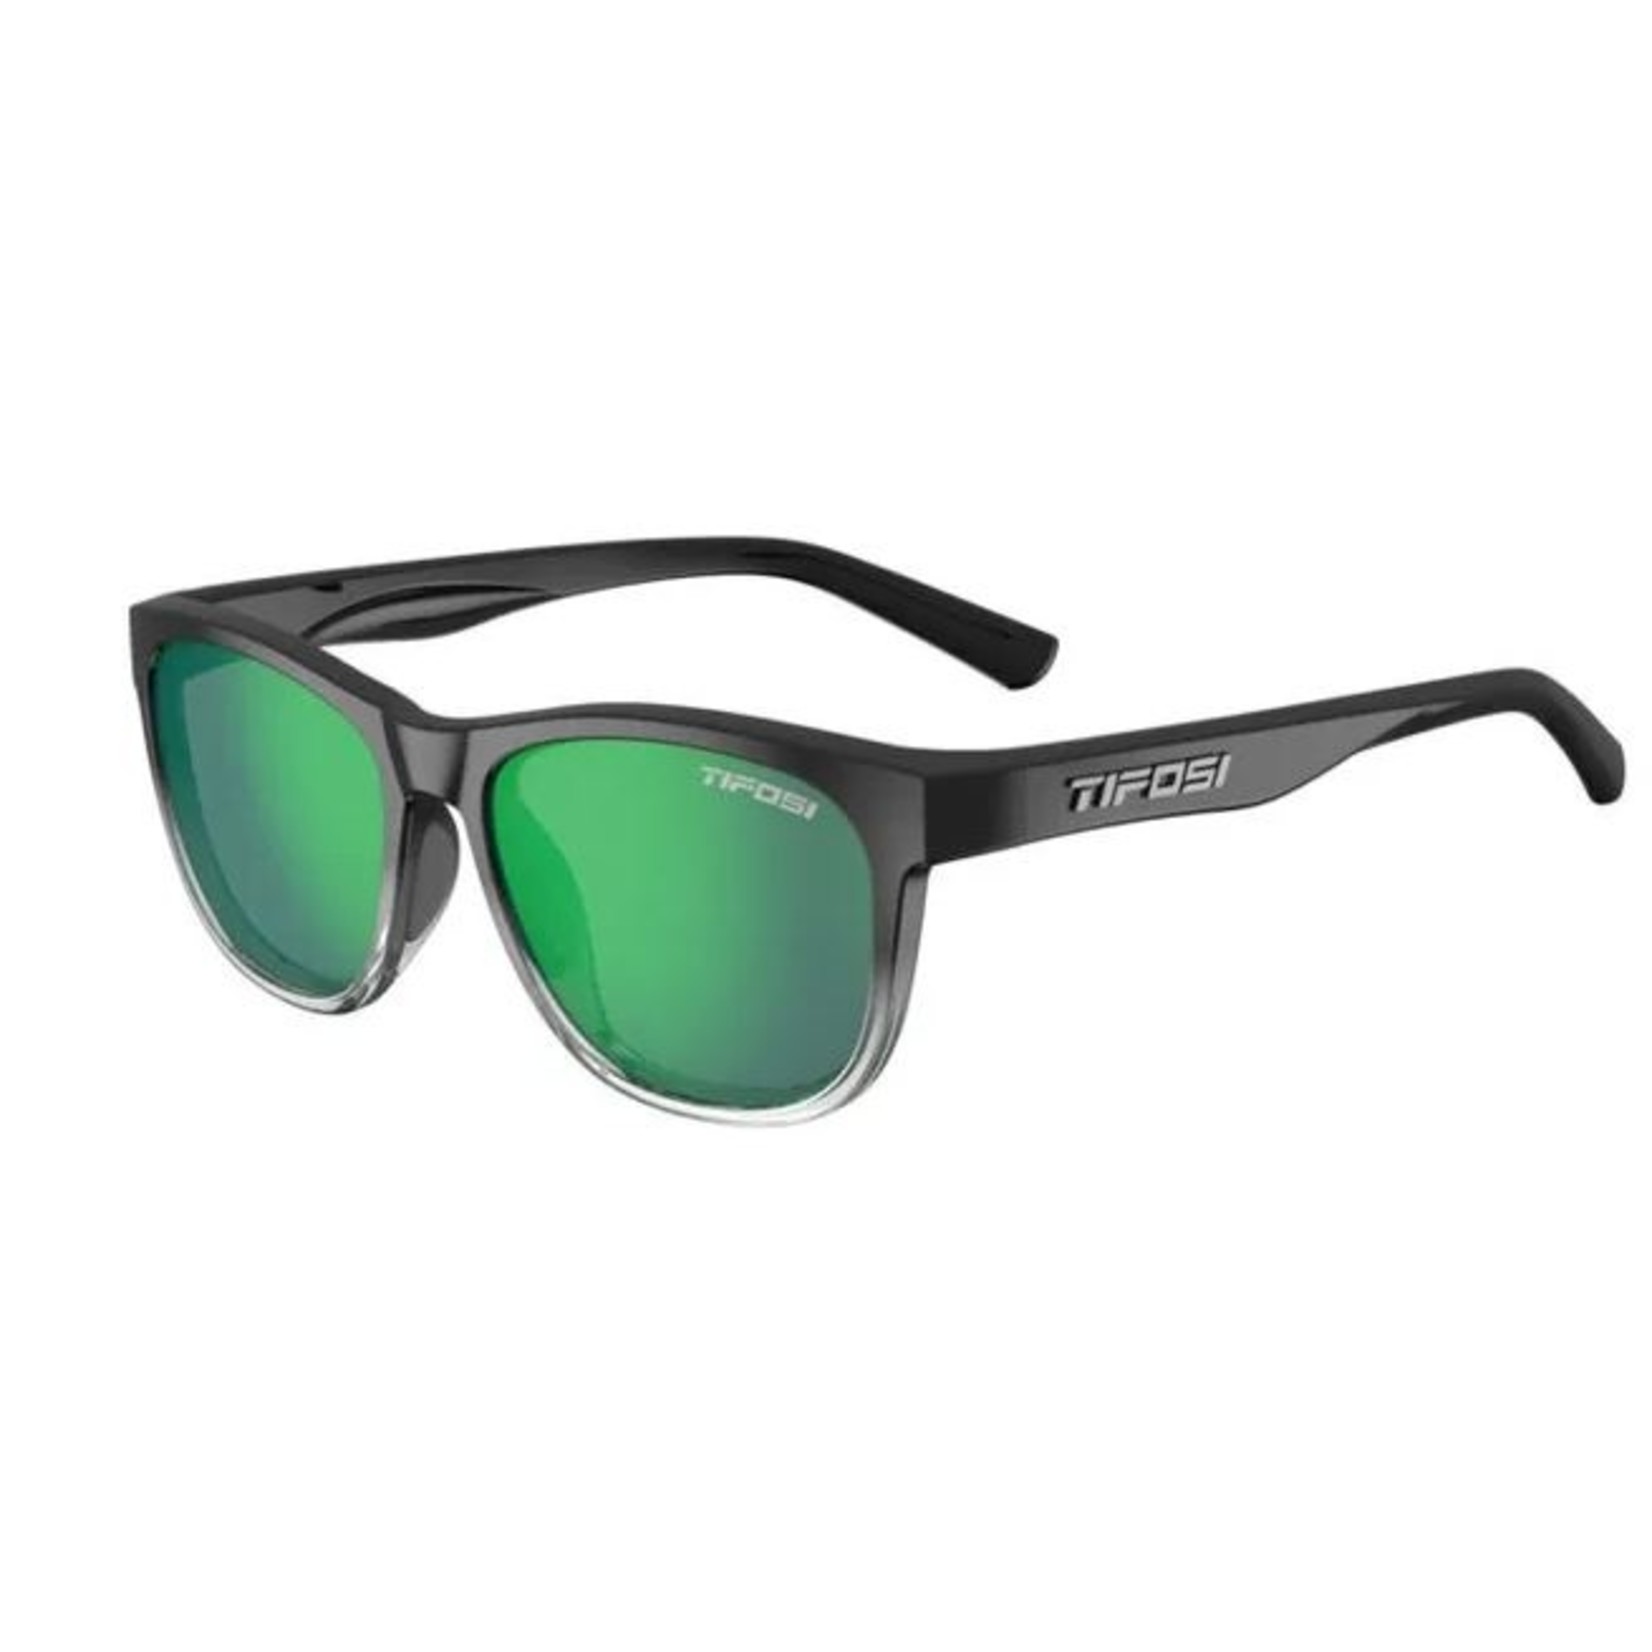 Tifosi Tifosi Cycling Glasses - LTD Swank - Onyx Fade Shatterproof, Scratch-Resistant